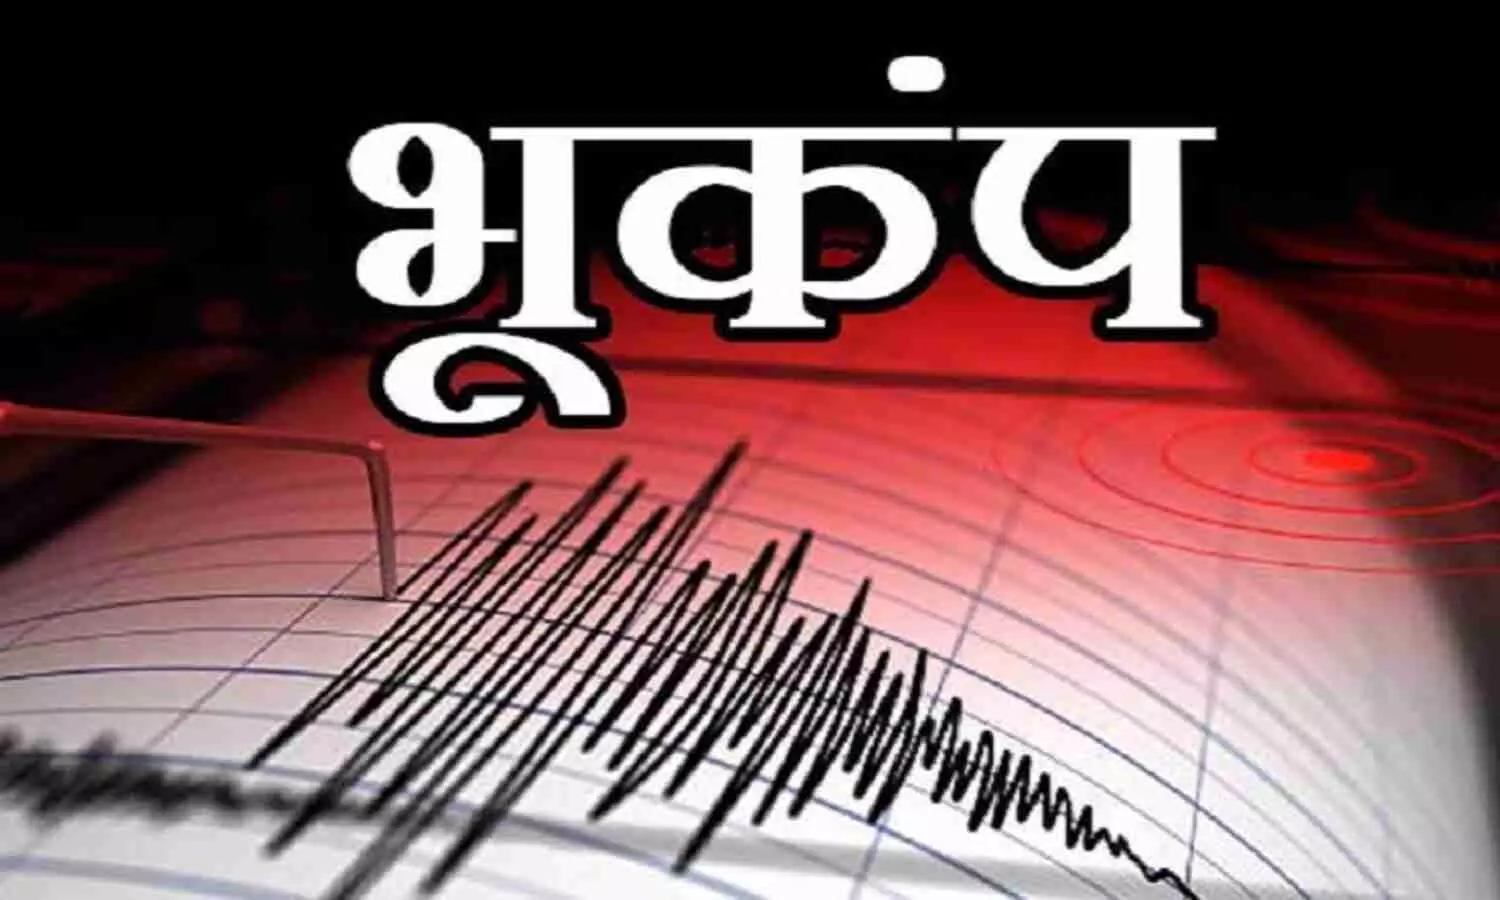 Earthquake in Bangladesh and Taiwan